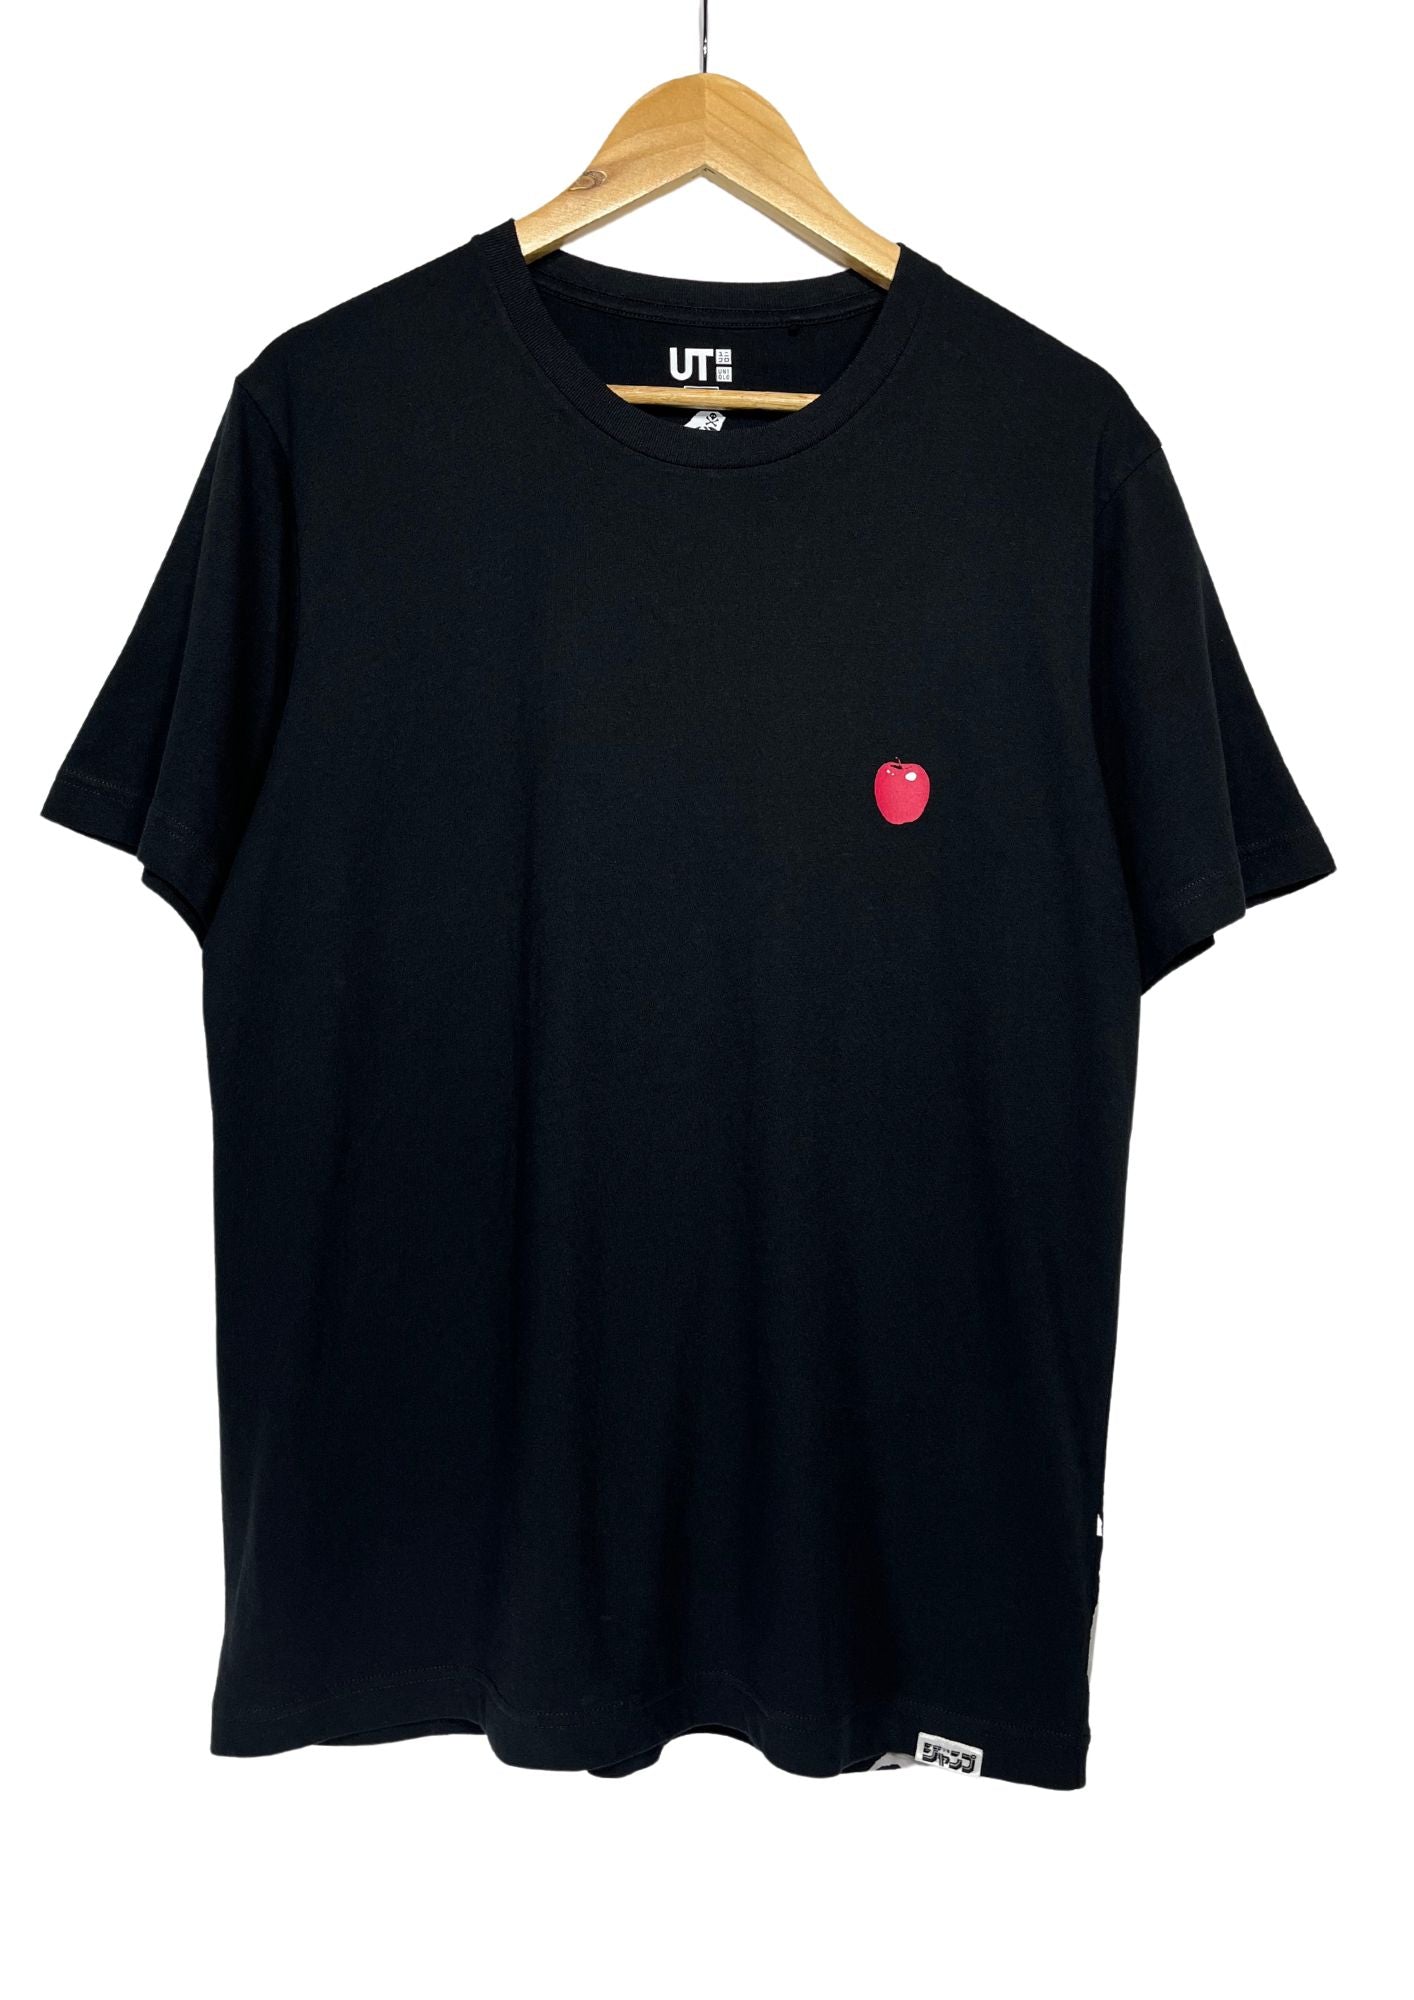 Death Note x UT Ryuku T-shirt